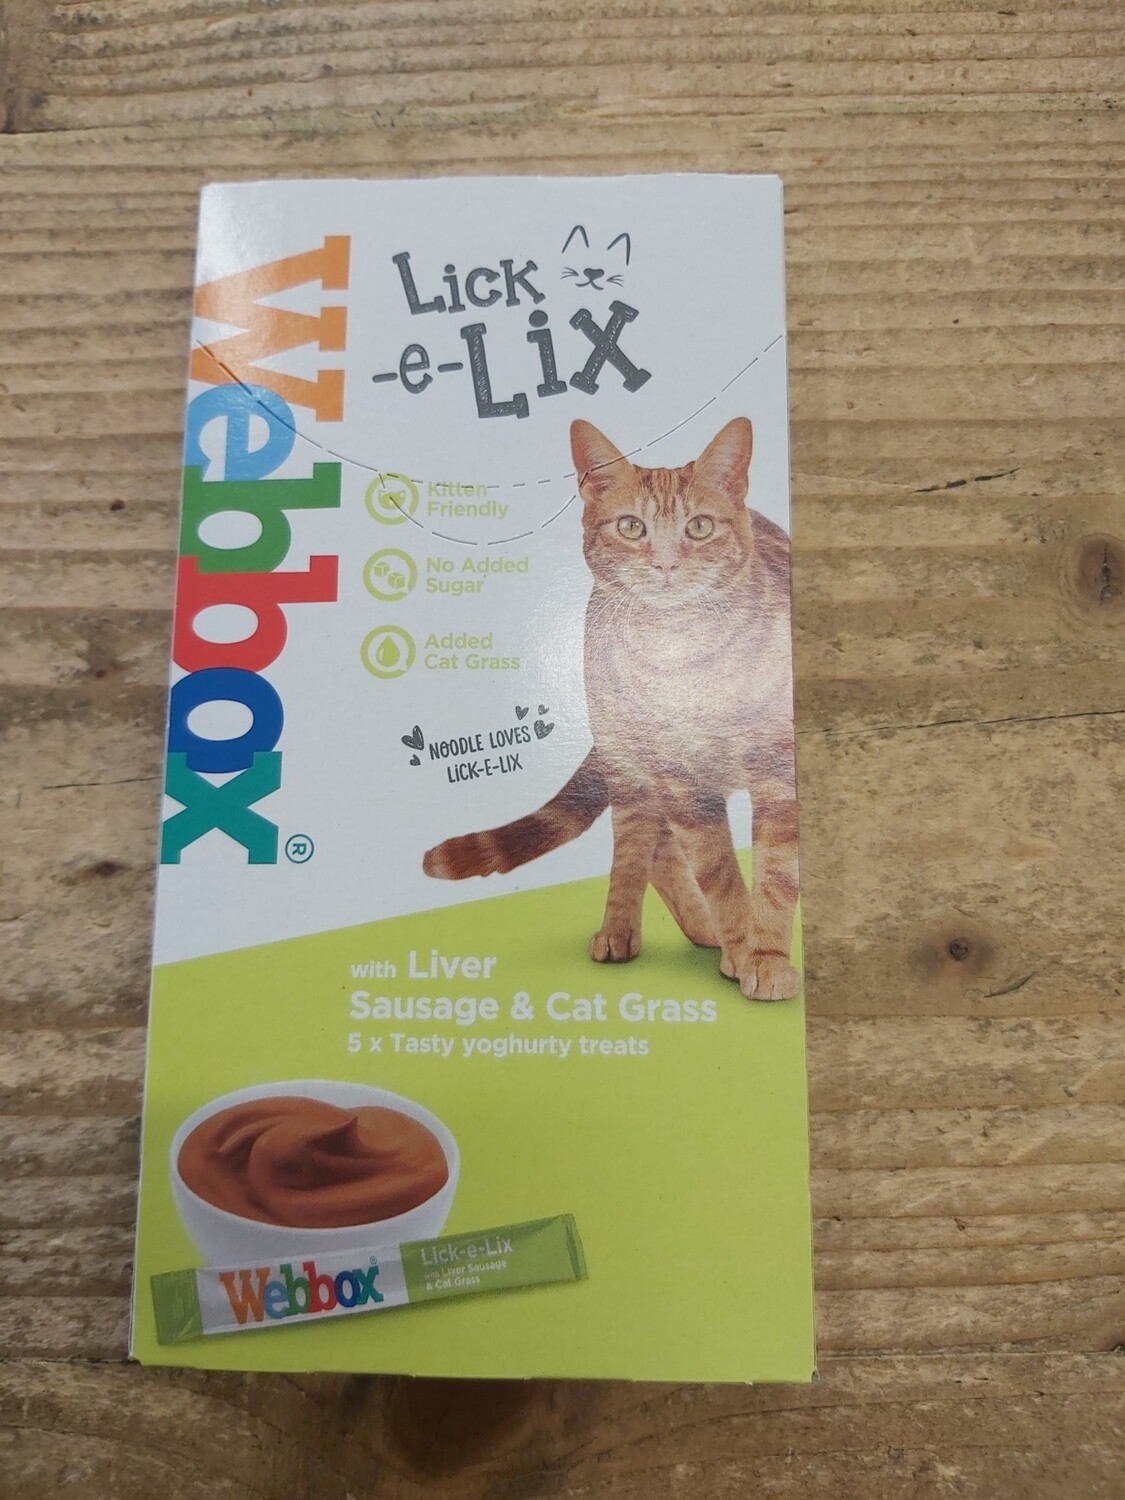 Webbox Lick-e-Lix Liver sausage & Cat Grass